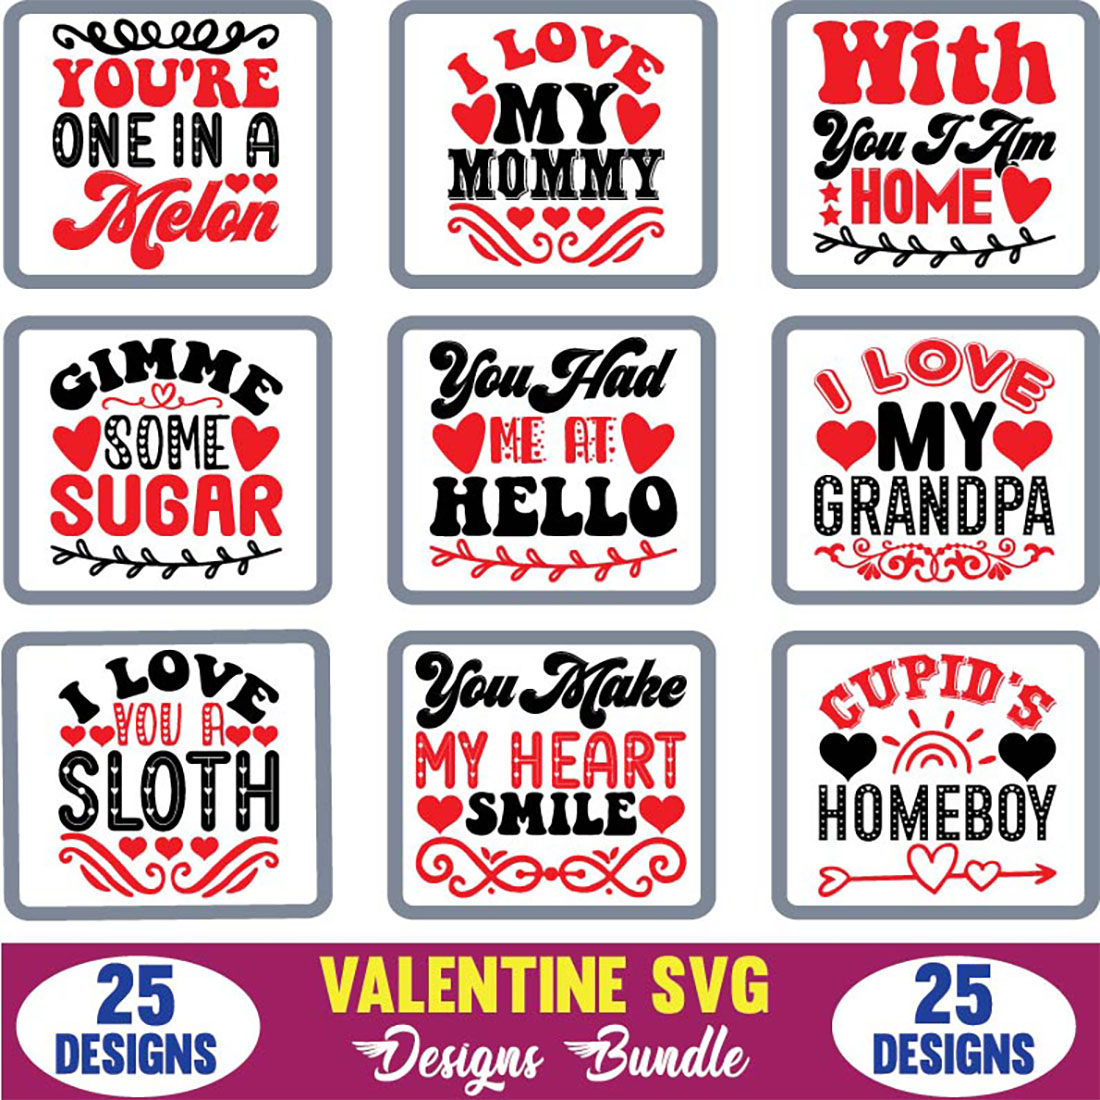 Valentine Quotes SVG Designs Bundle cover image.